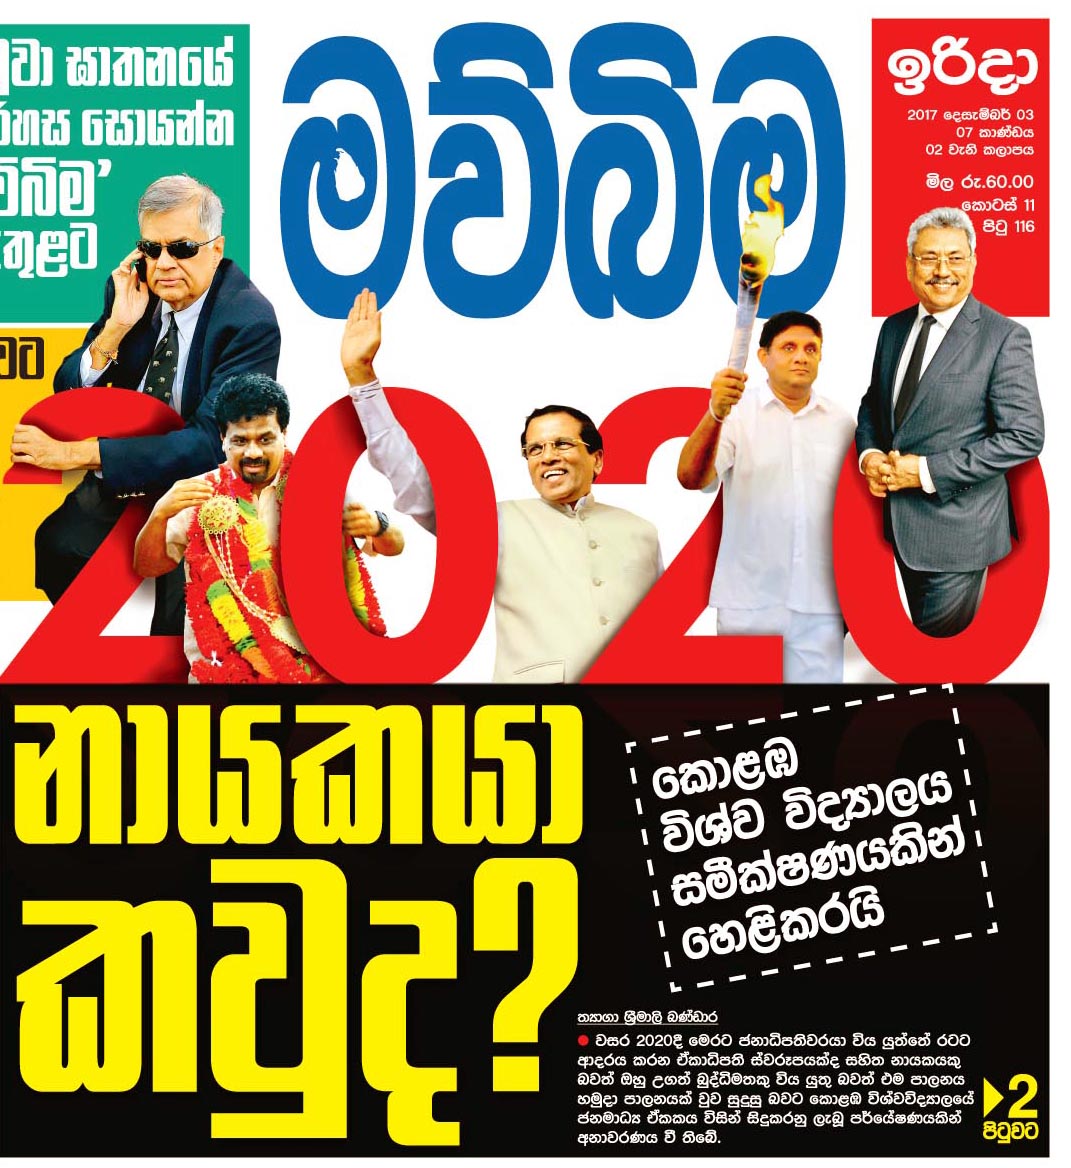 Mawbima Sinhala Newspaper